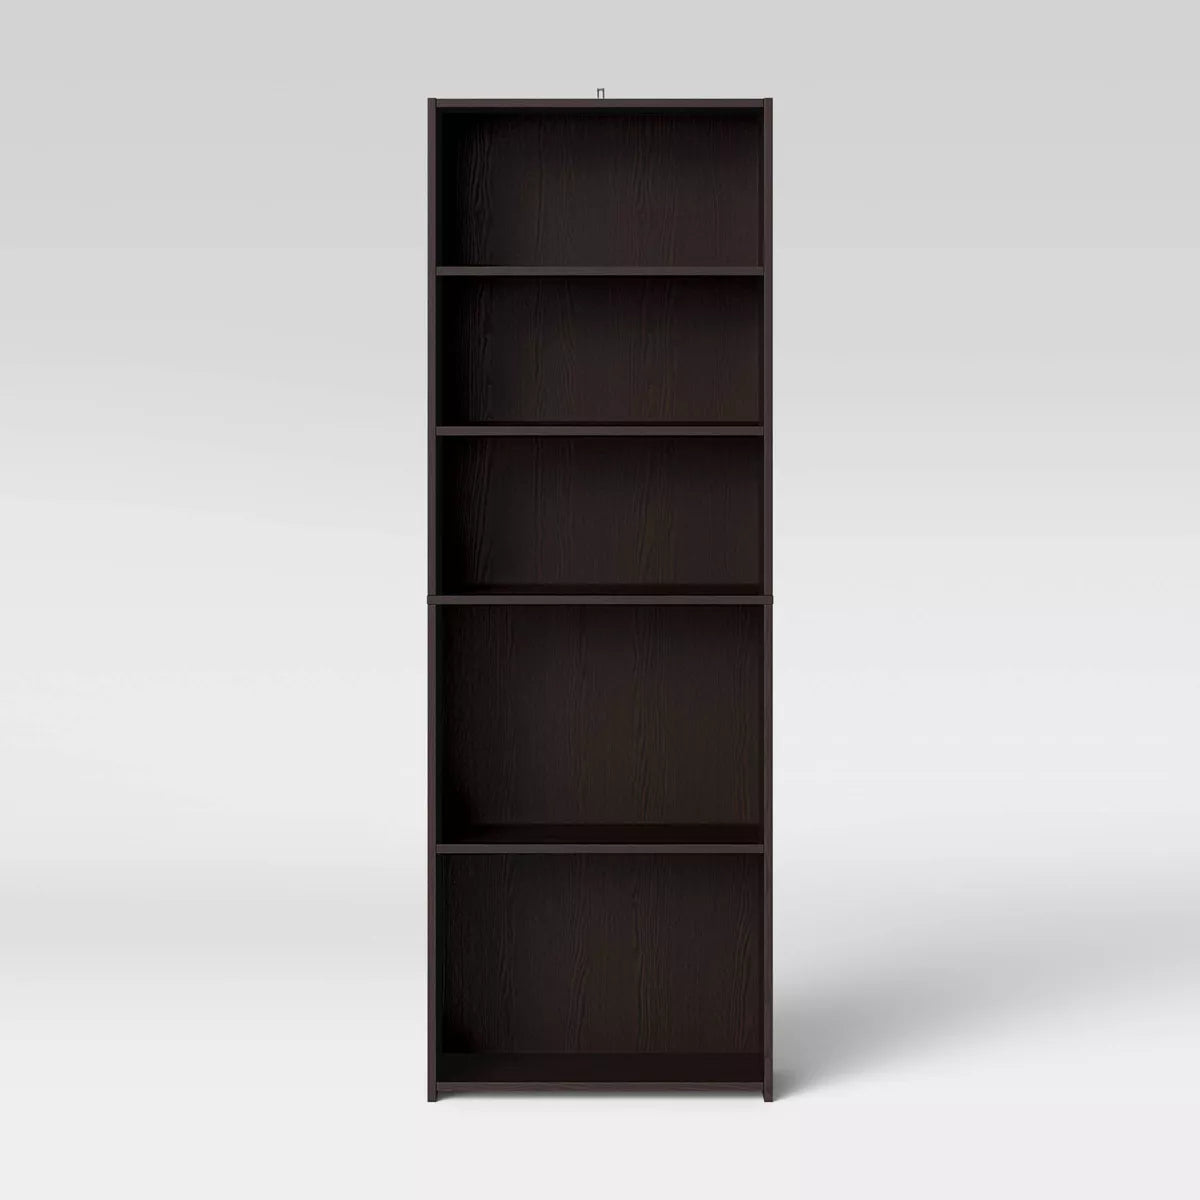 5 Shelf Bookcase - Room Essentials™ (Espresso Brown)